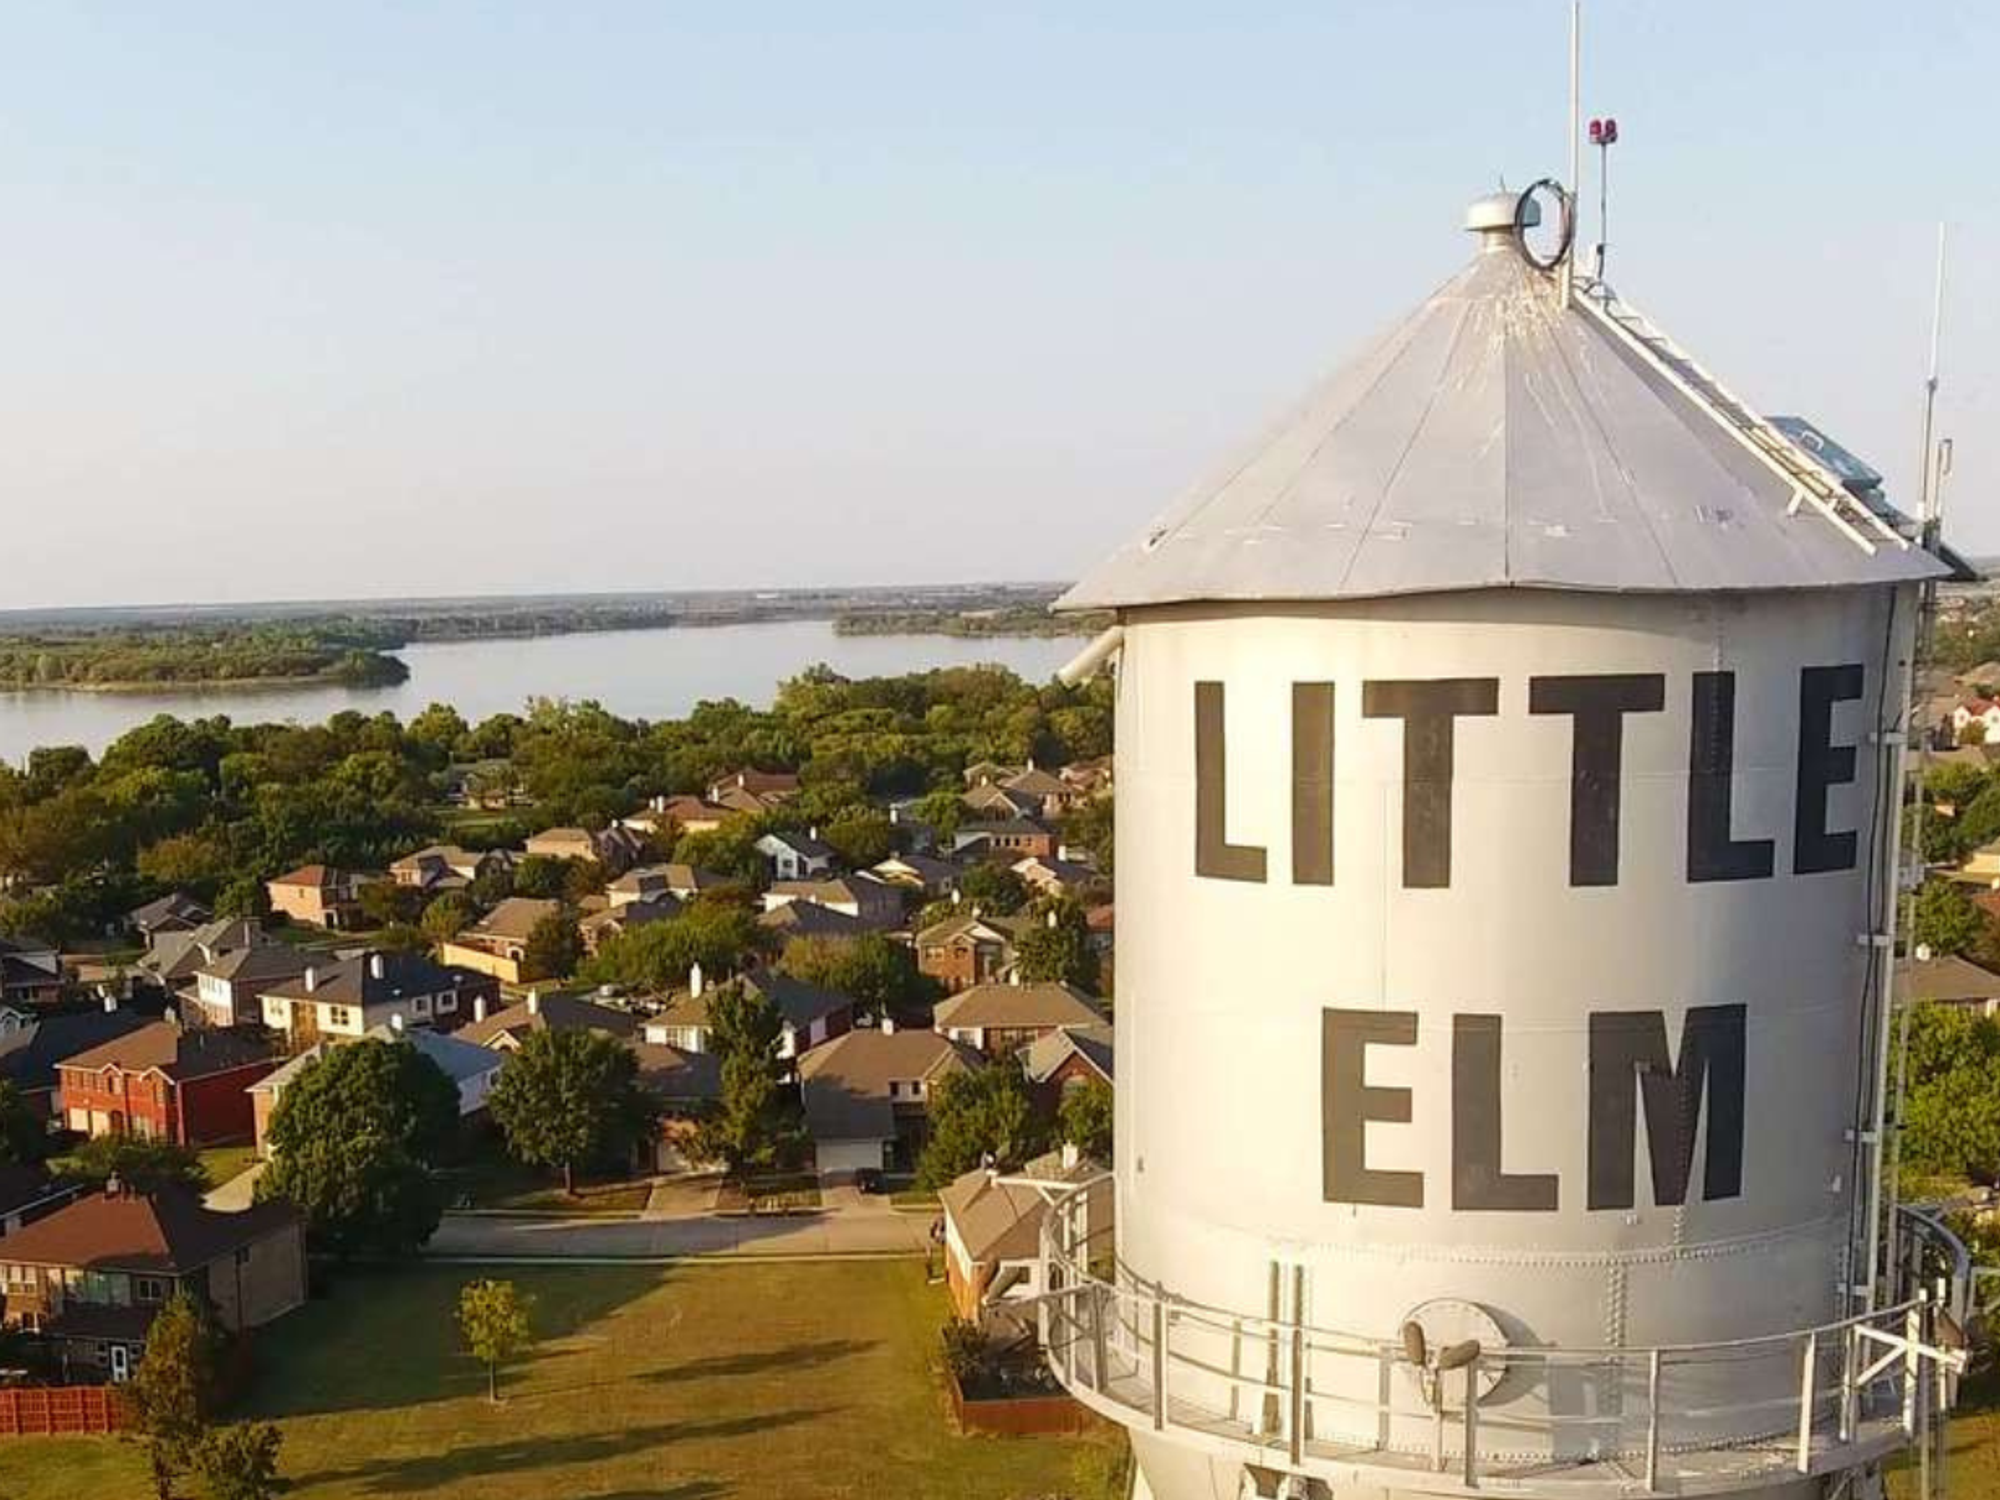 Little Elm, Texas